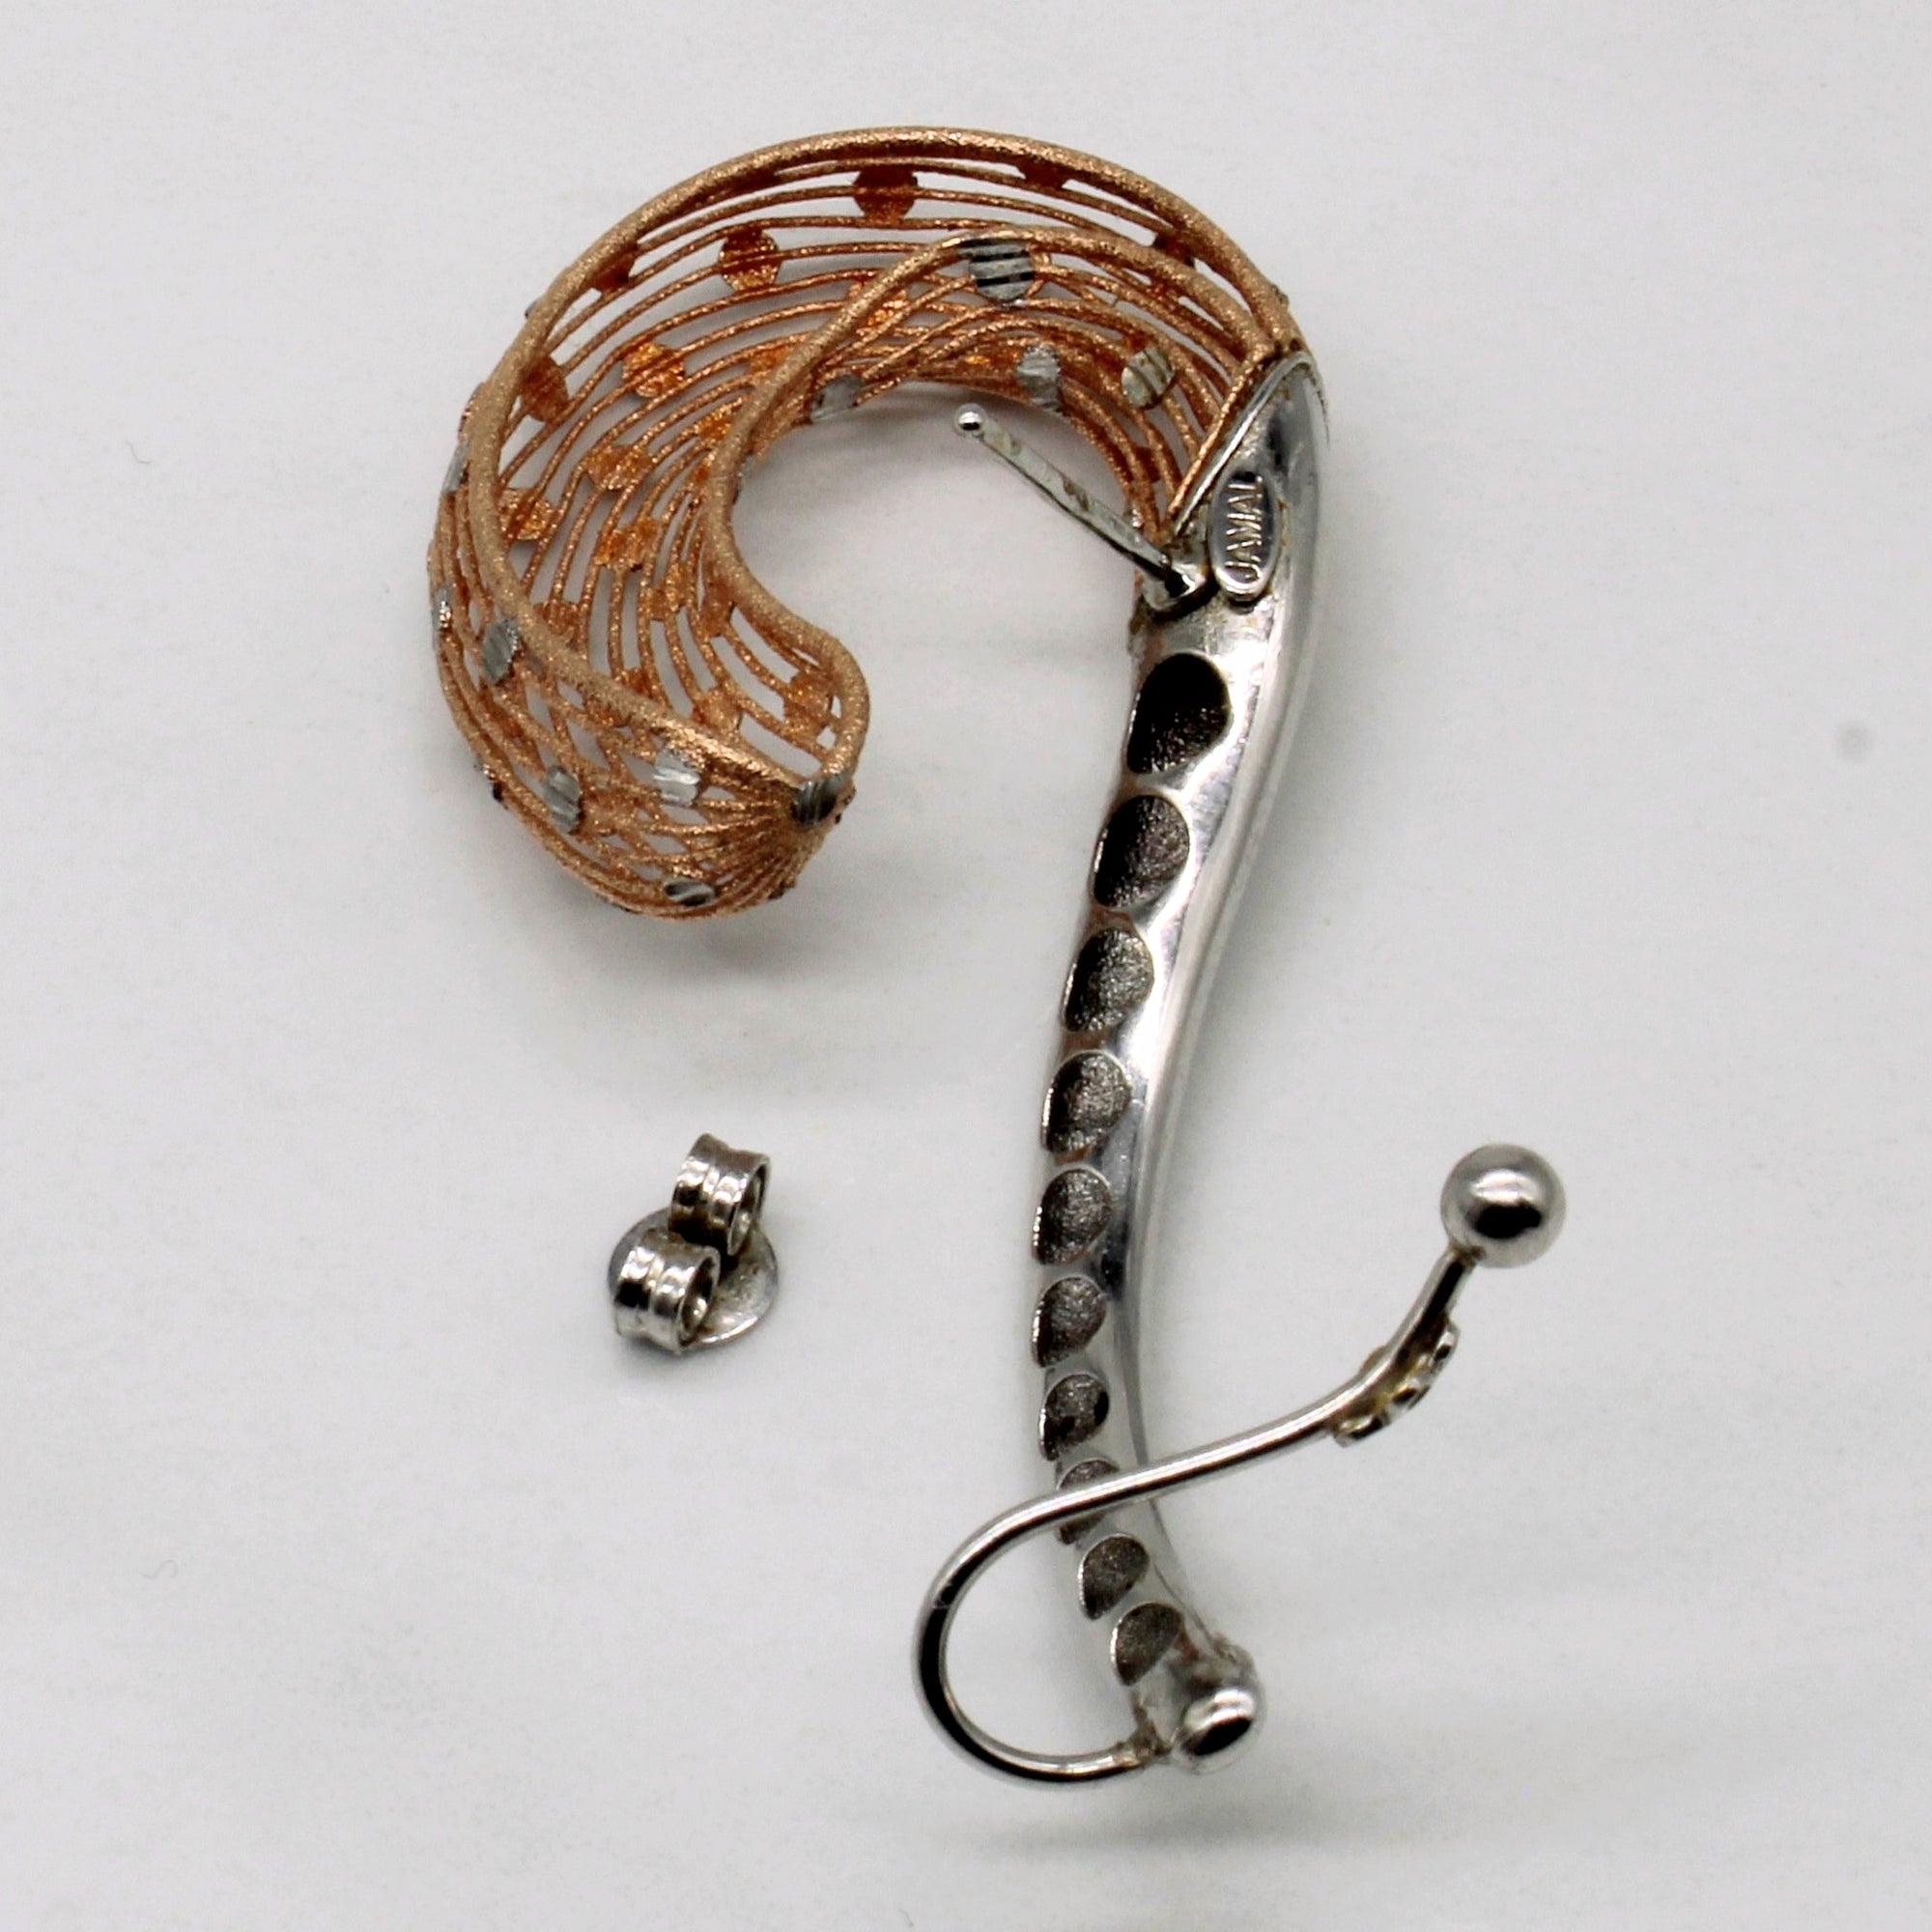 Abstract Two Tone Swirl Stud Earrings |